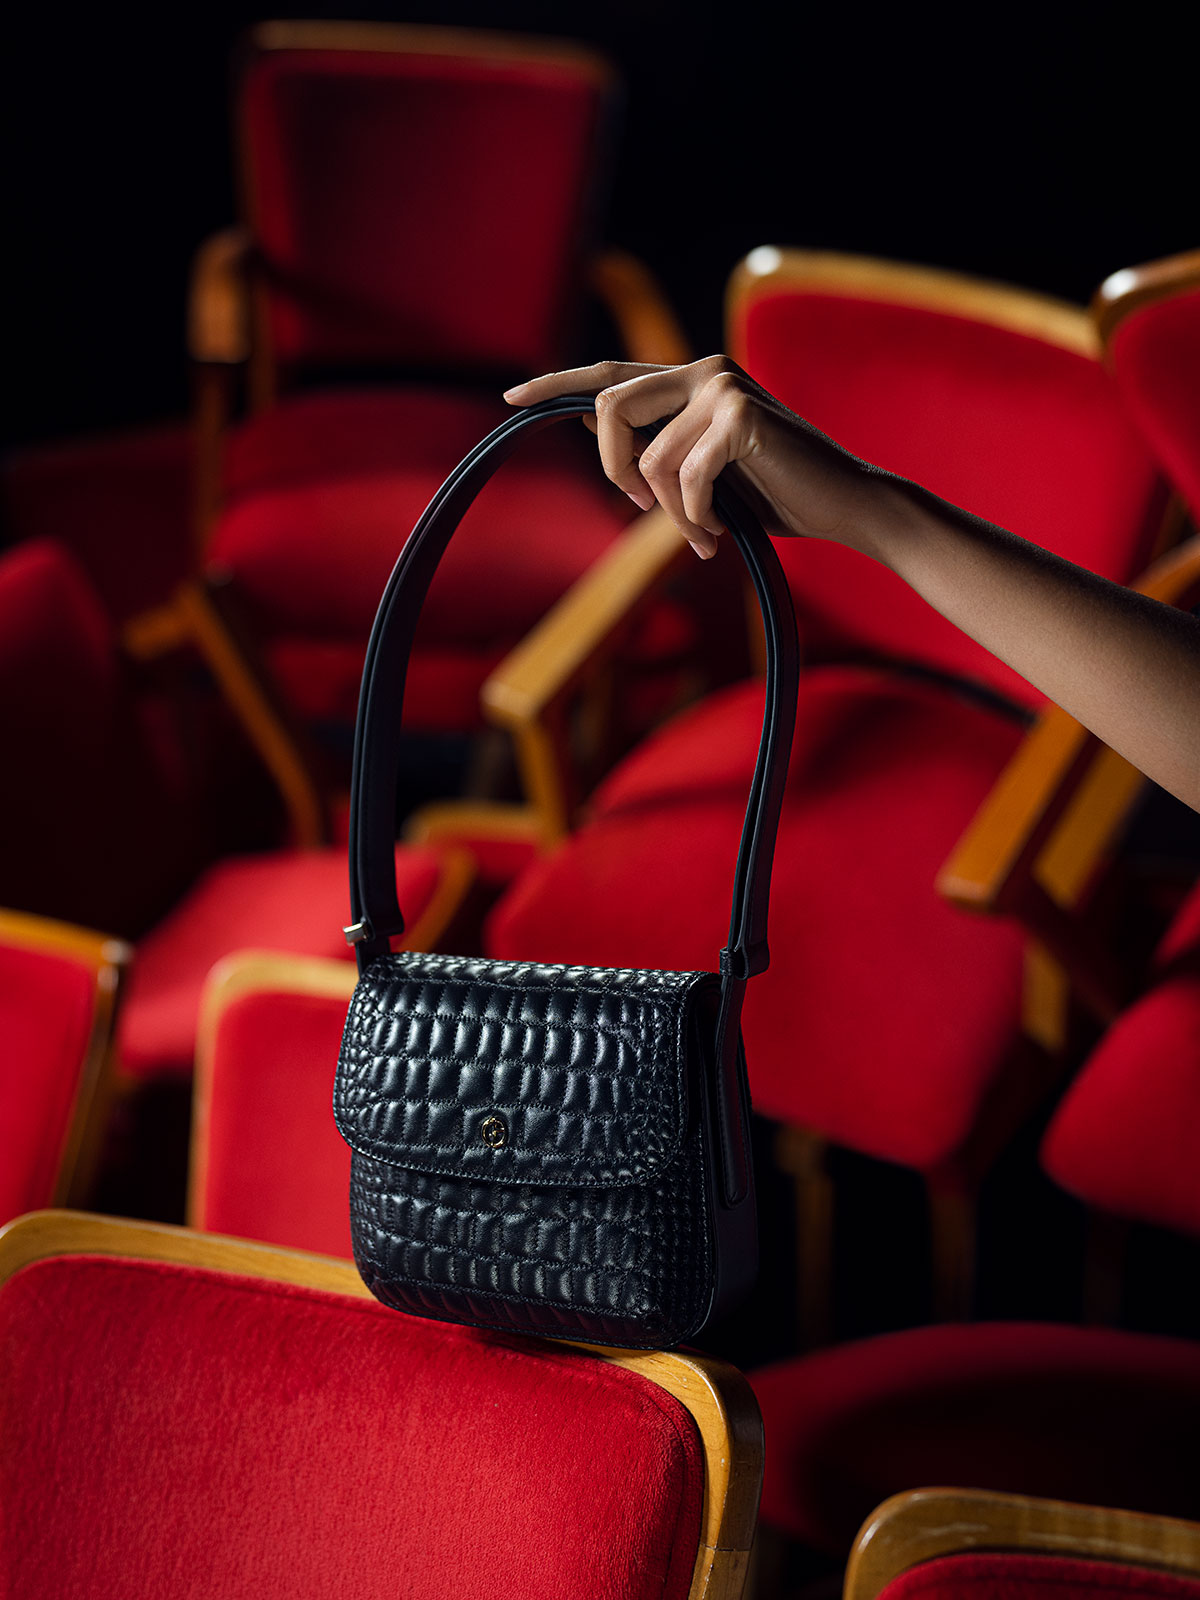 Emporio Armani handbags//stylish and beautiful collection 2020 - YouTube